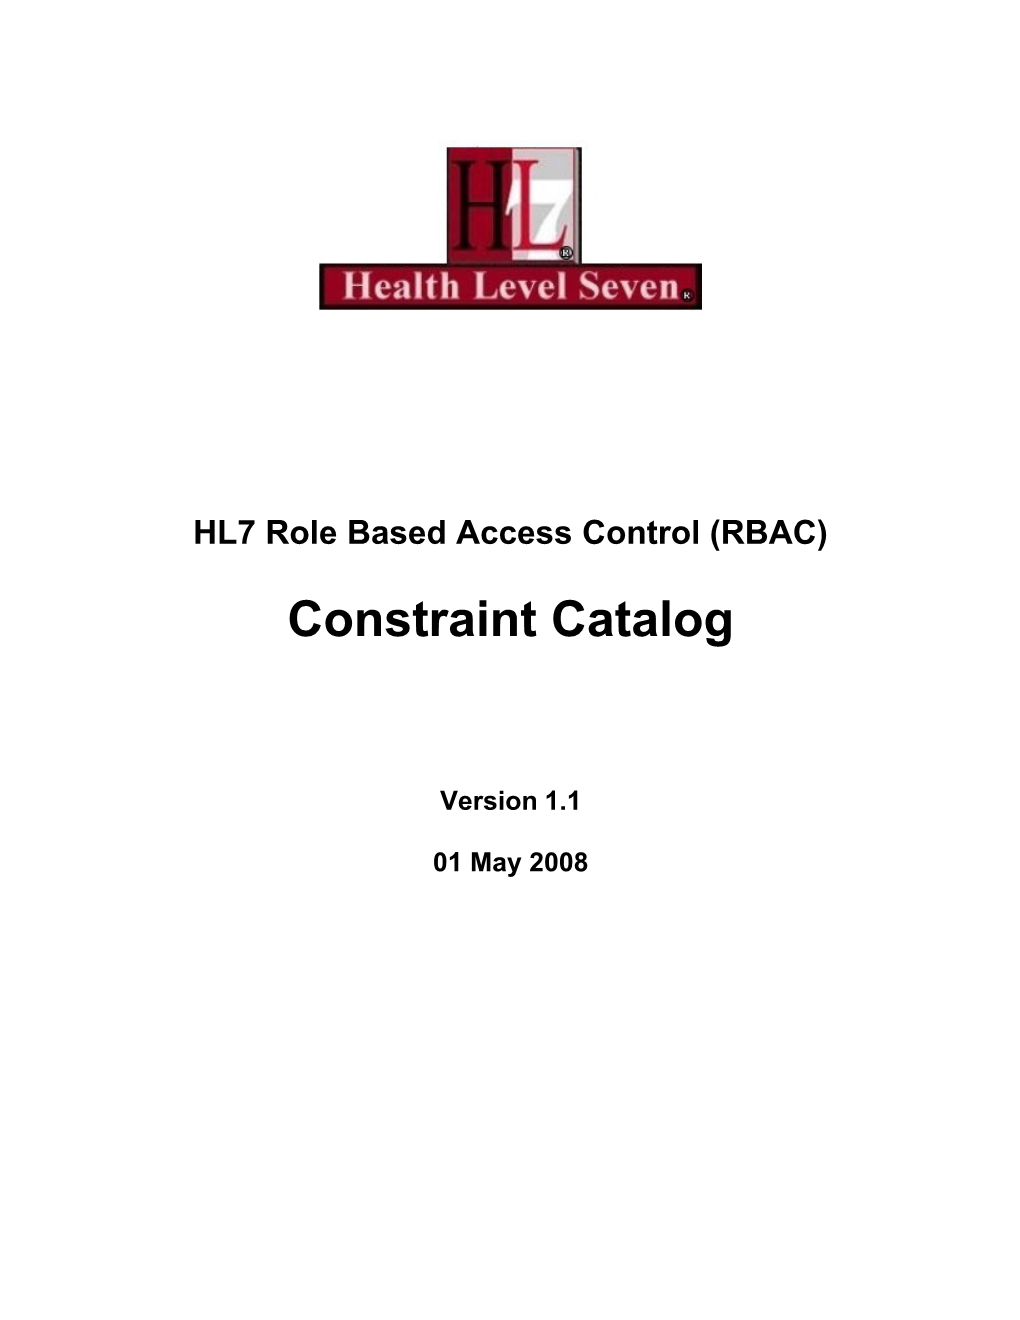 HL7 RBAC Constraint Catalog V1.1